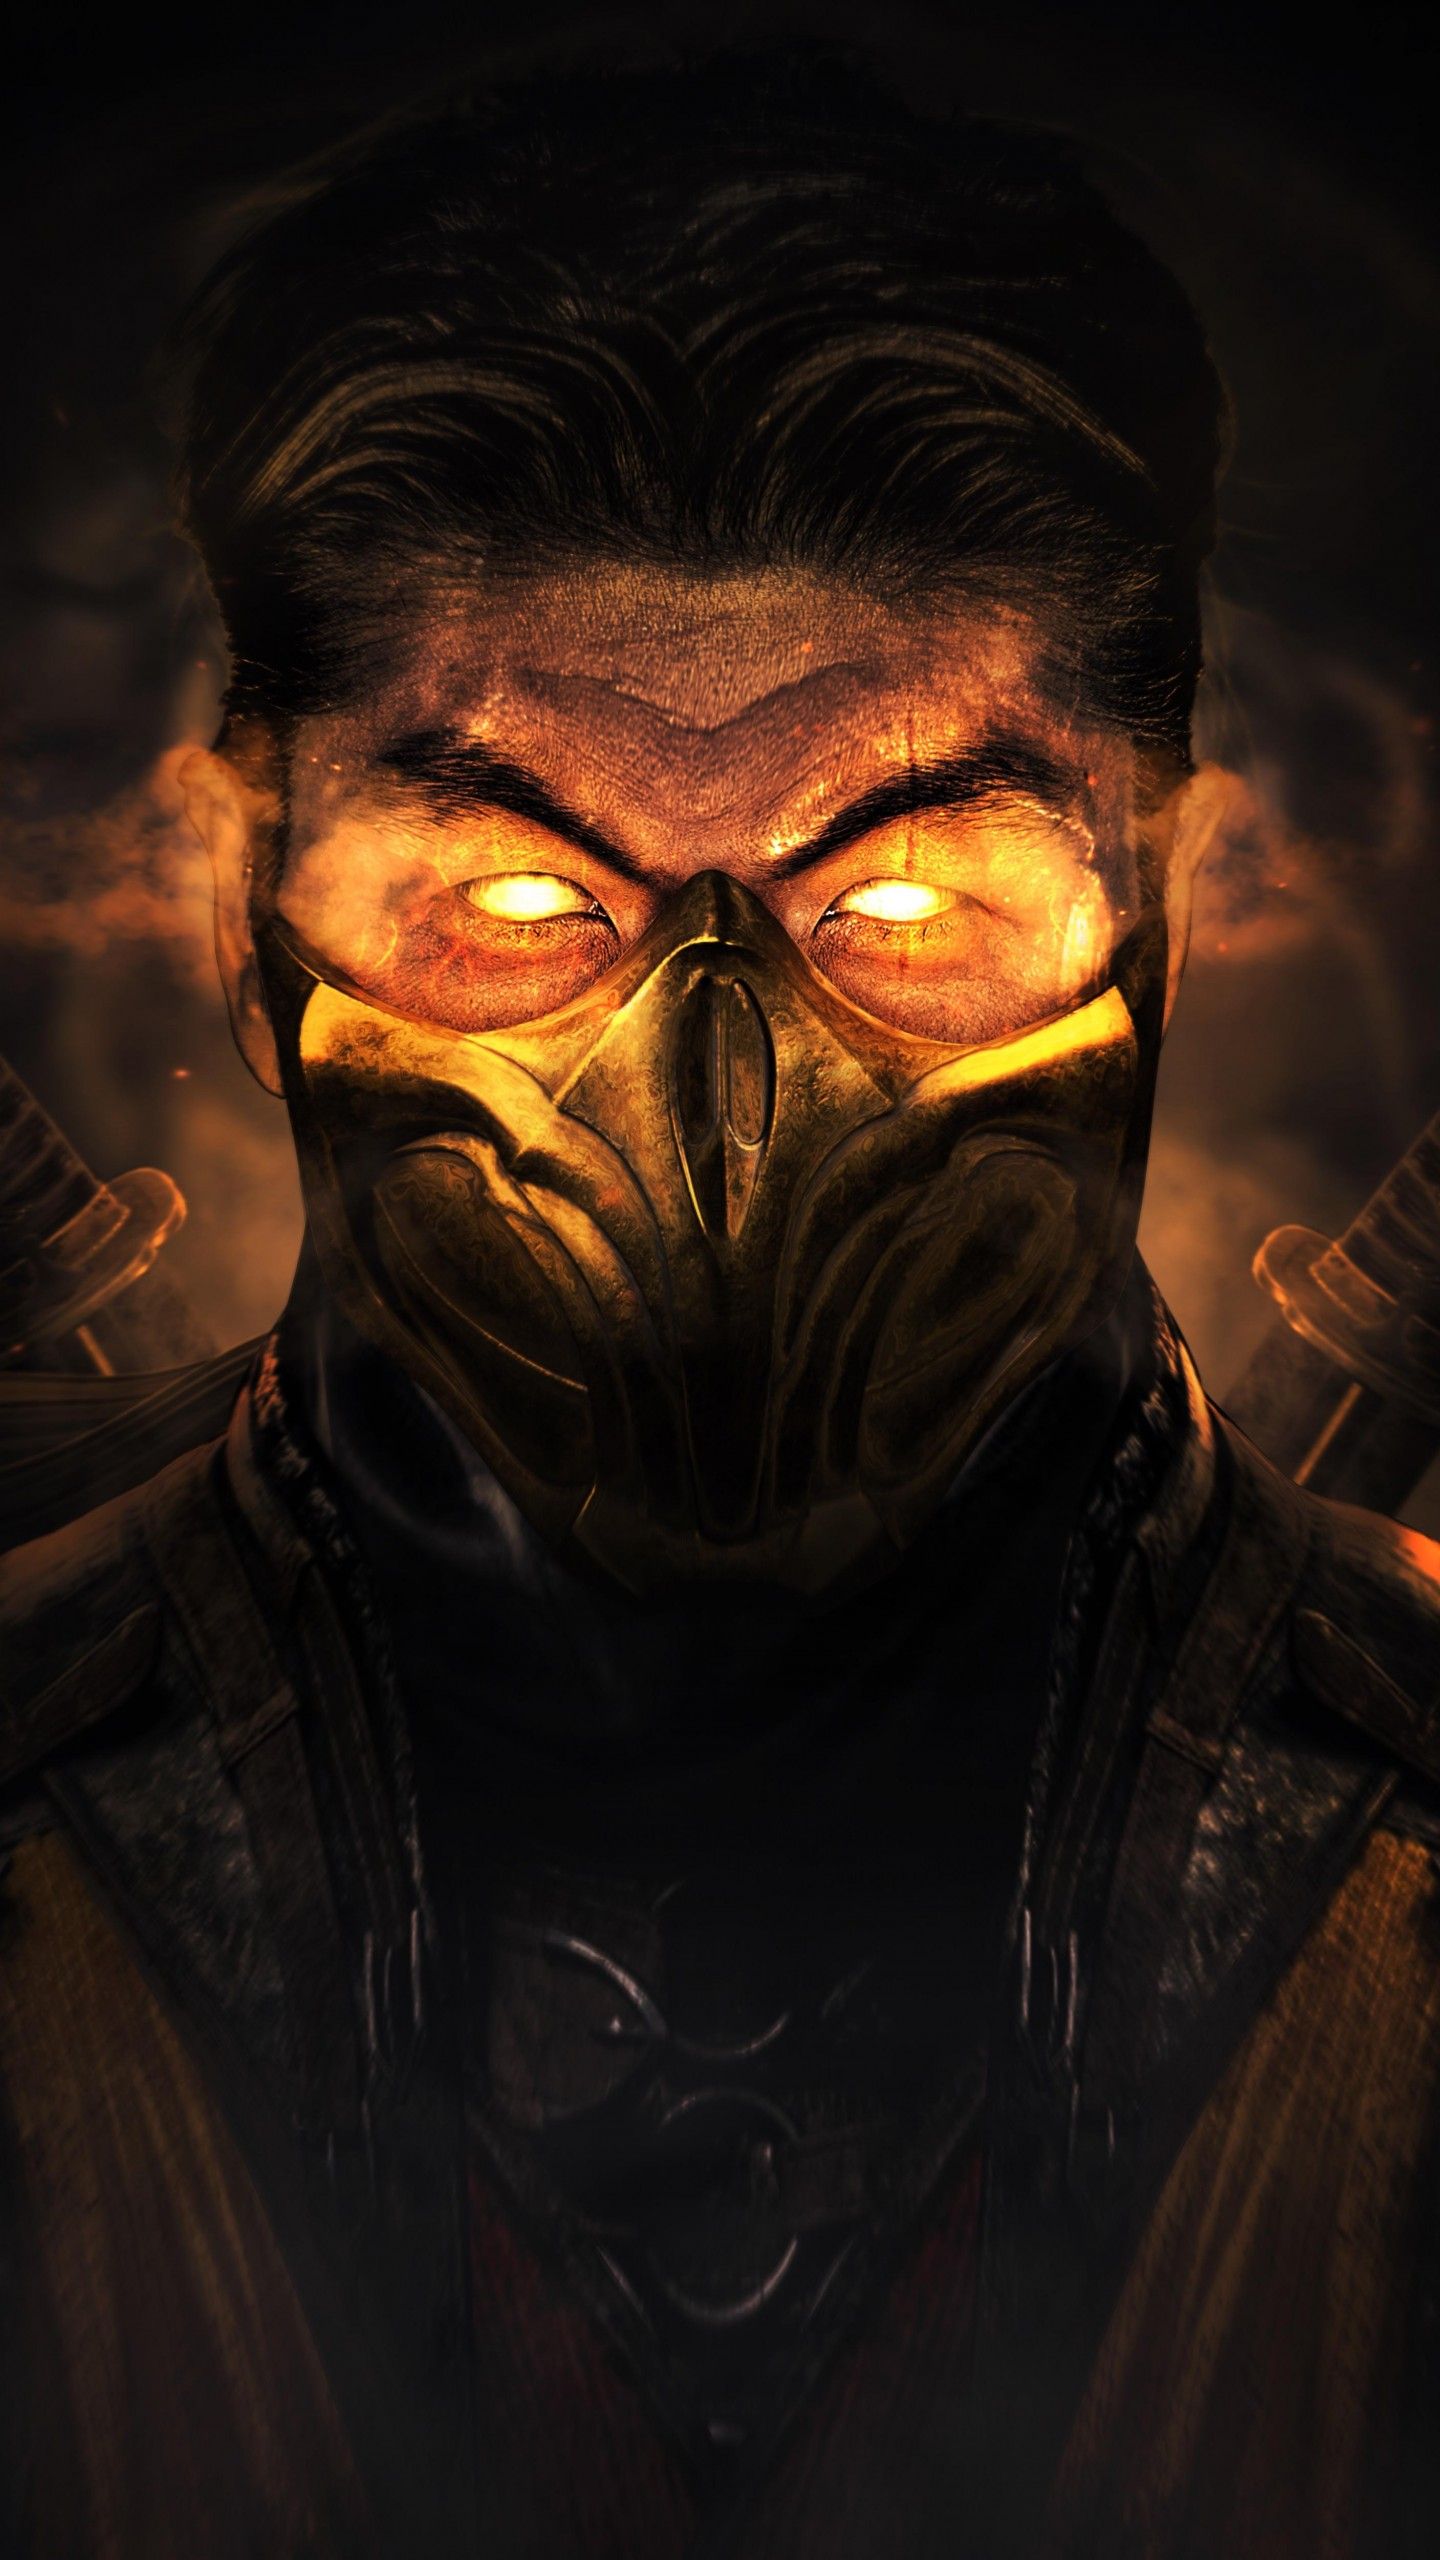 Mortal Kombat 11 4K Wallpaper, Scorpion, Games